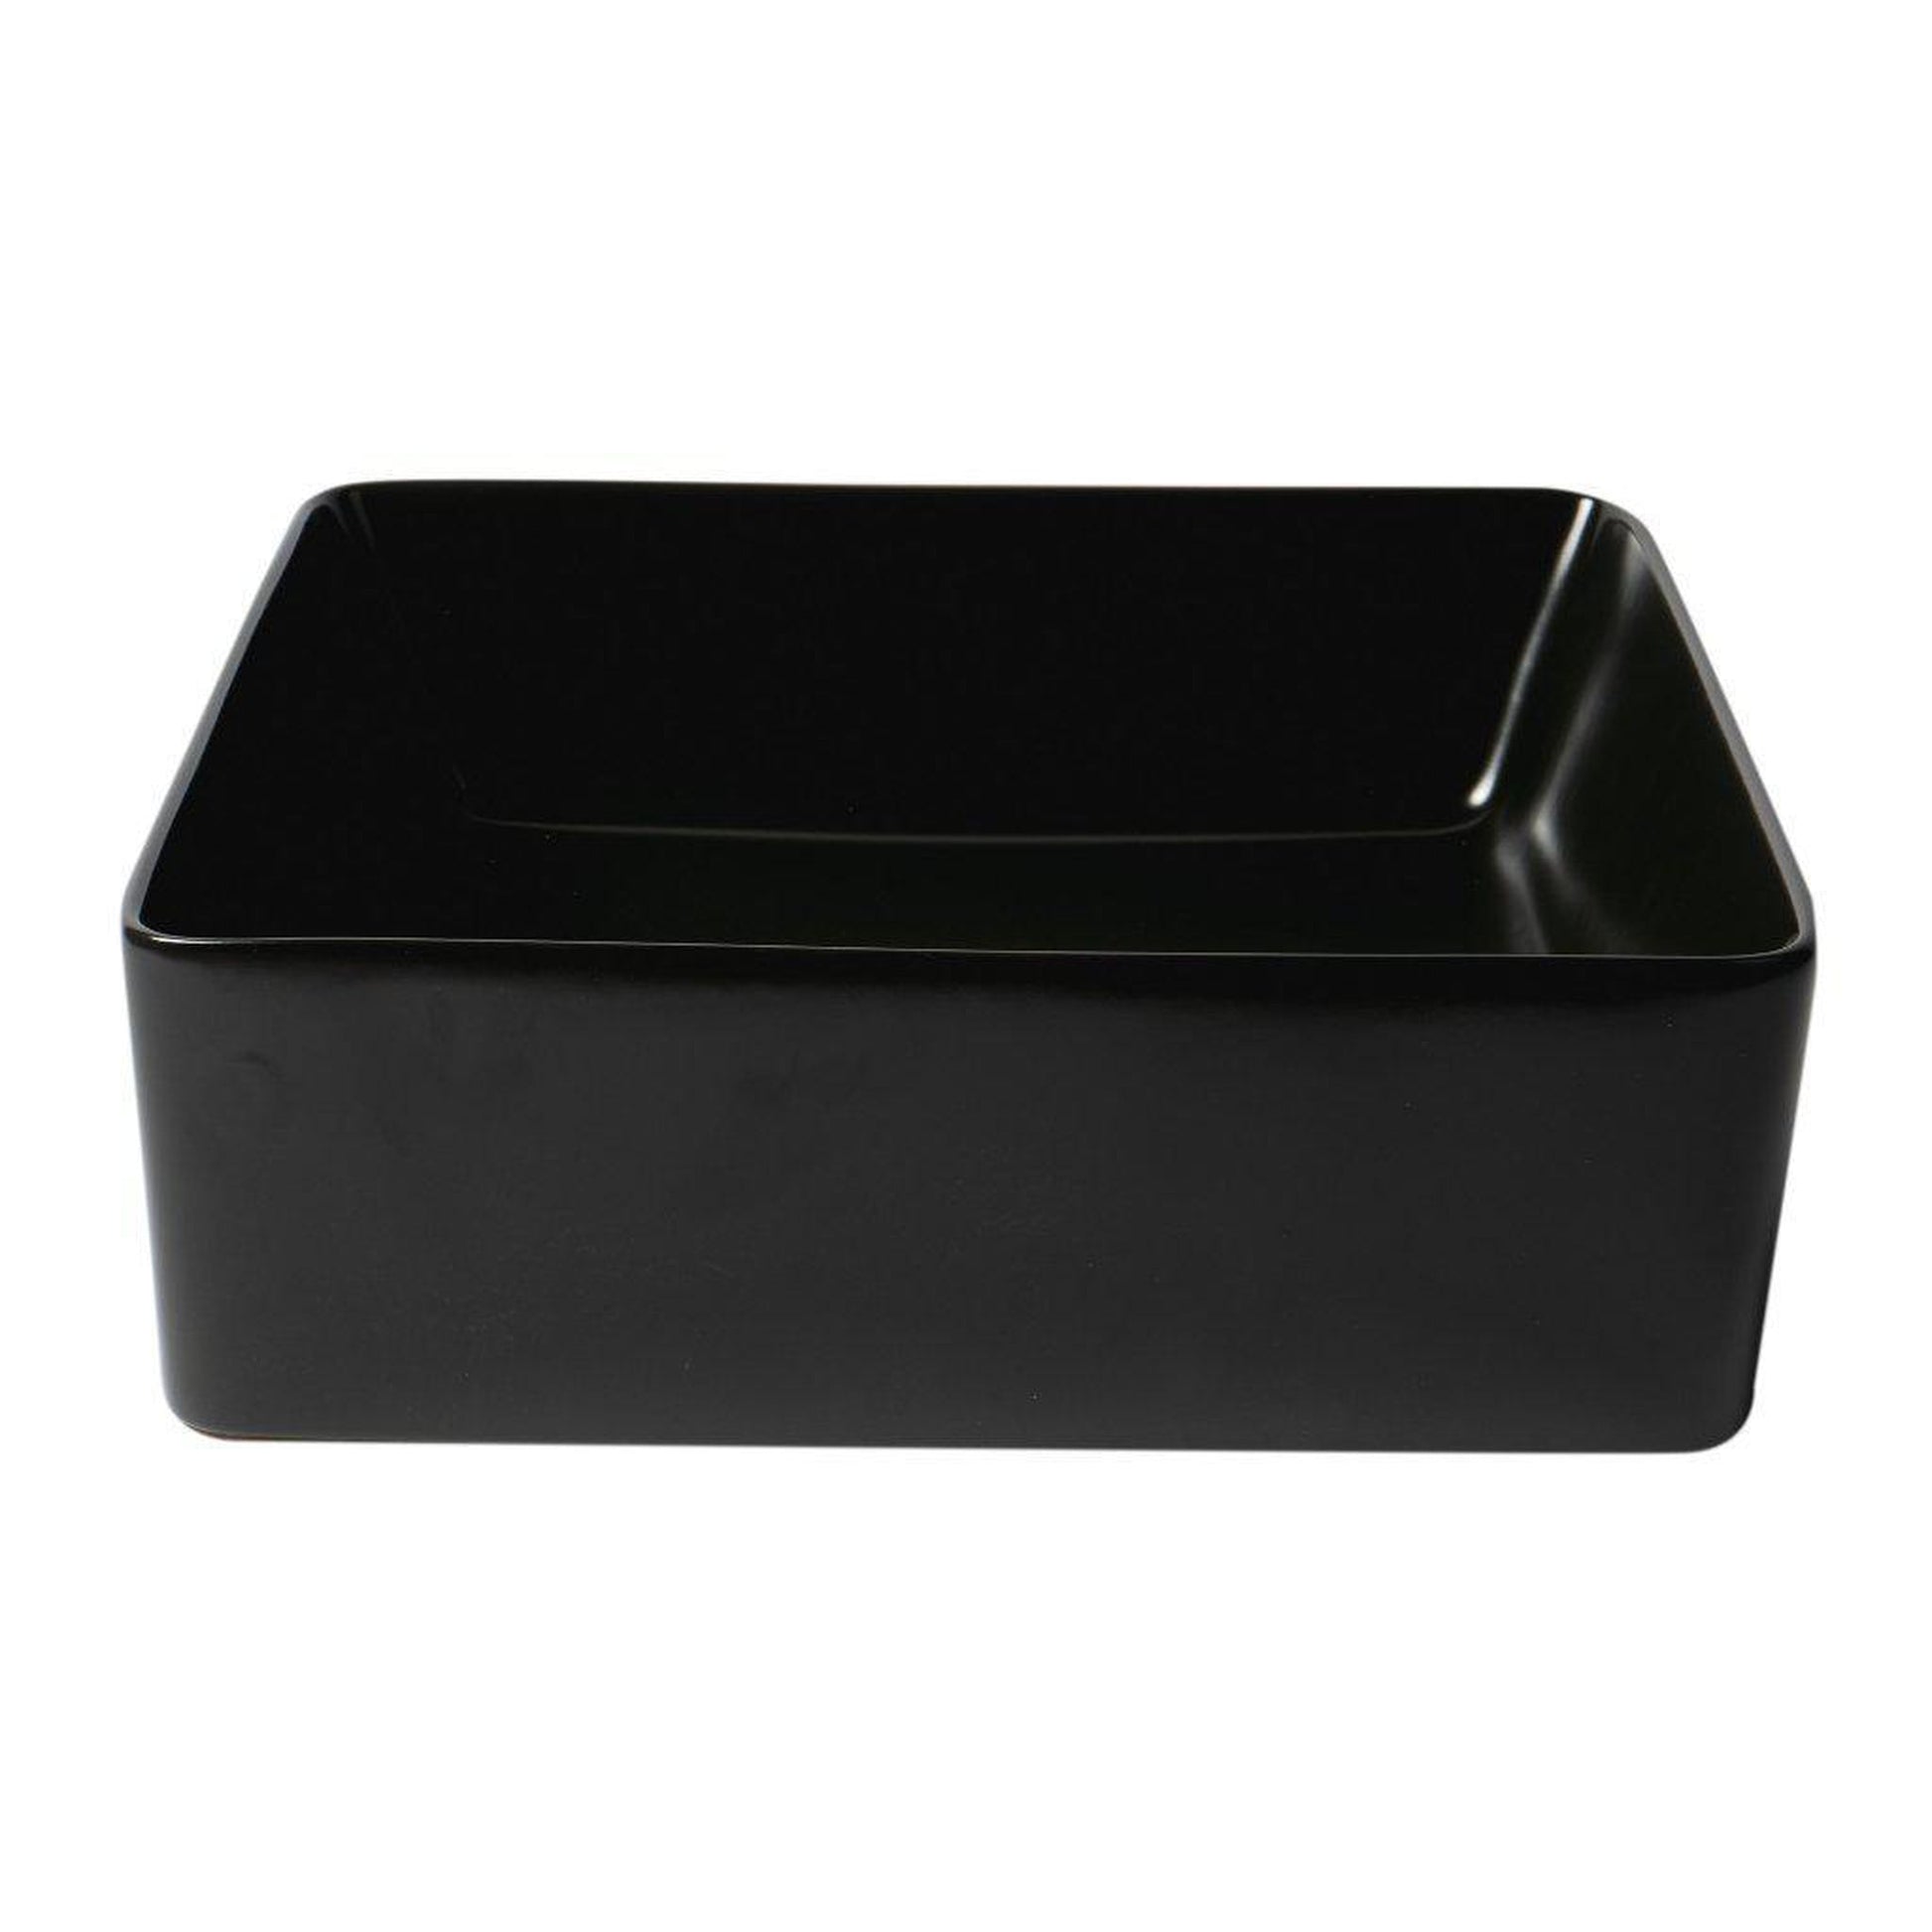 ALFI Brand ABC903-BM 16" Black Matte Above Mount Square Ceramic Bathroom Sink